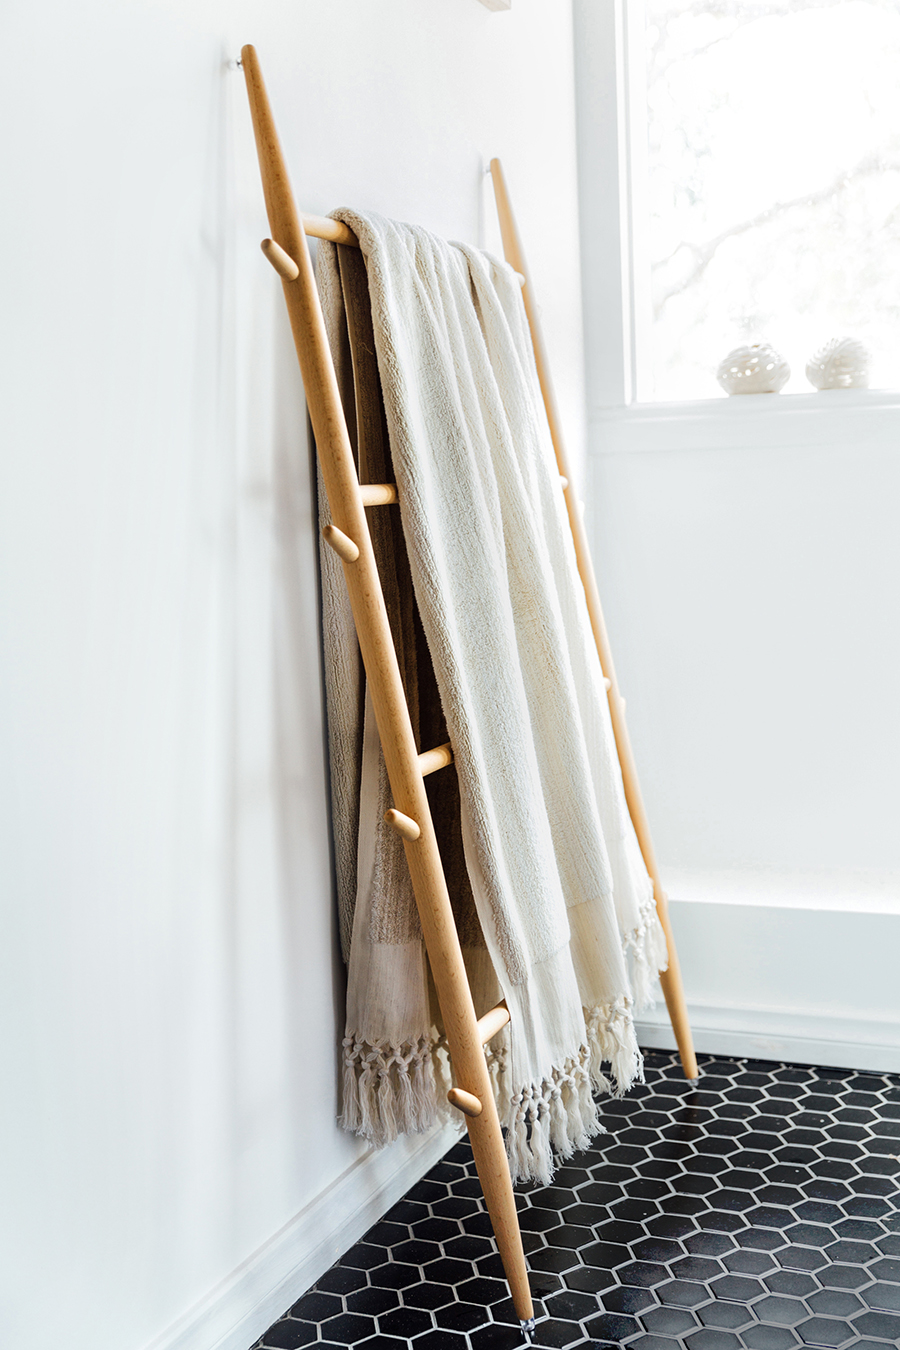 Loom Towels linen and cotton bath towels